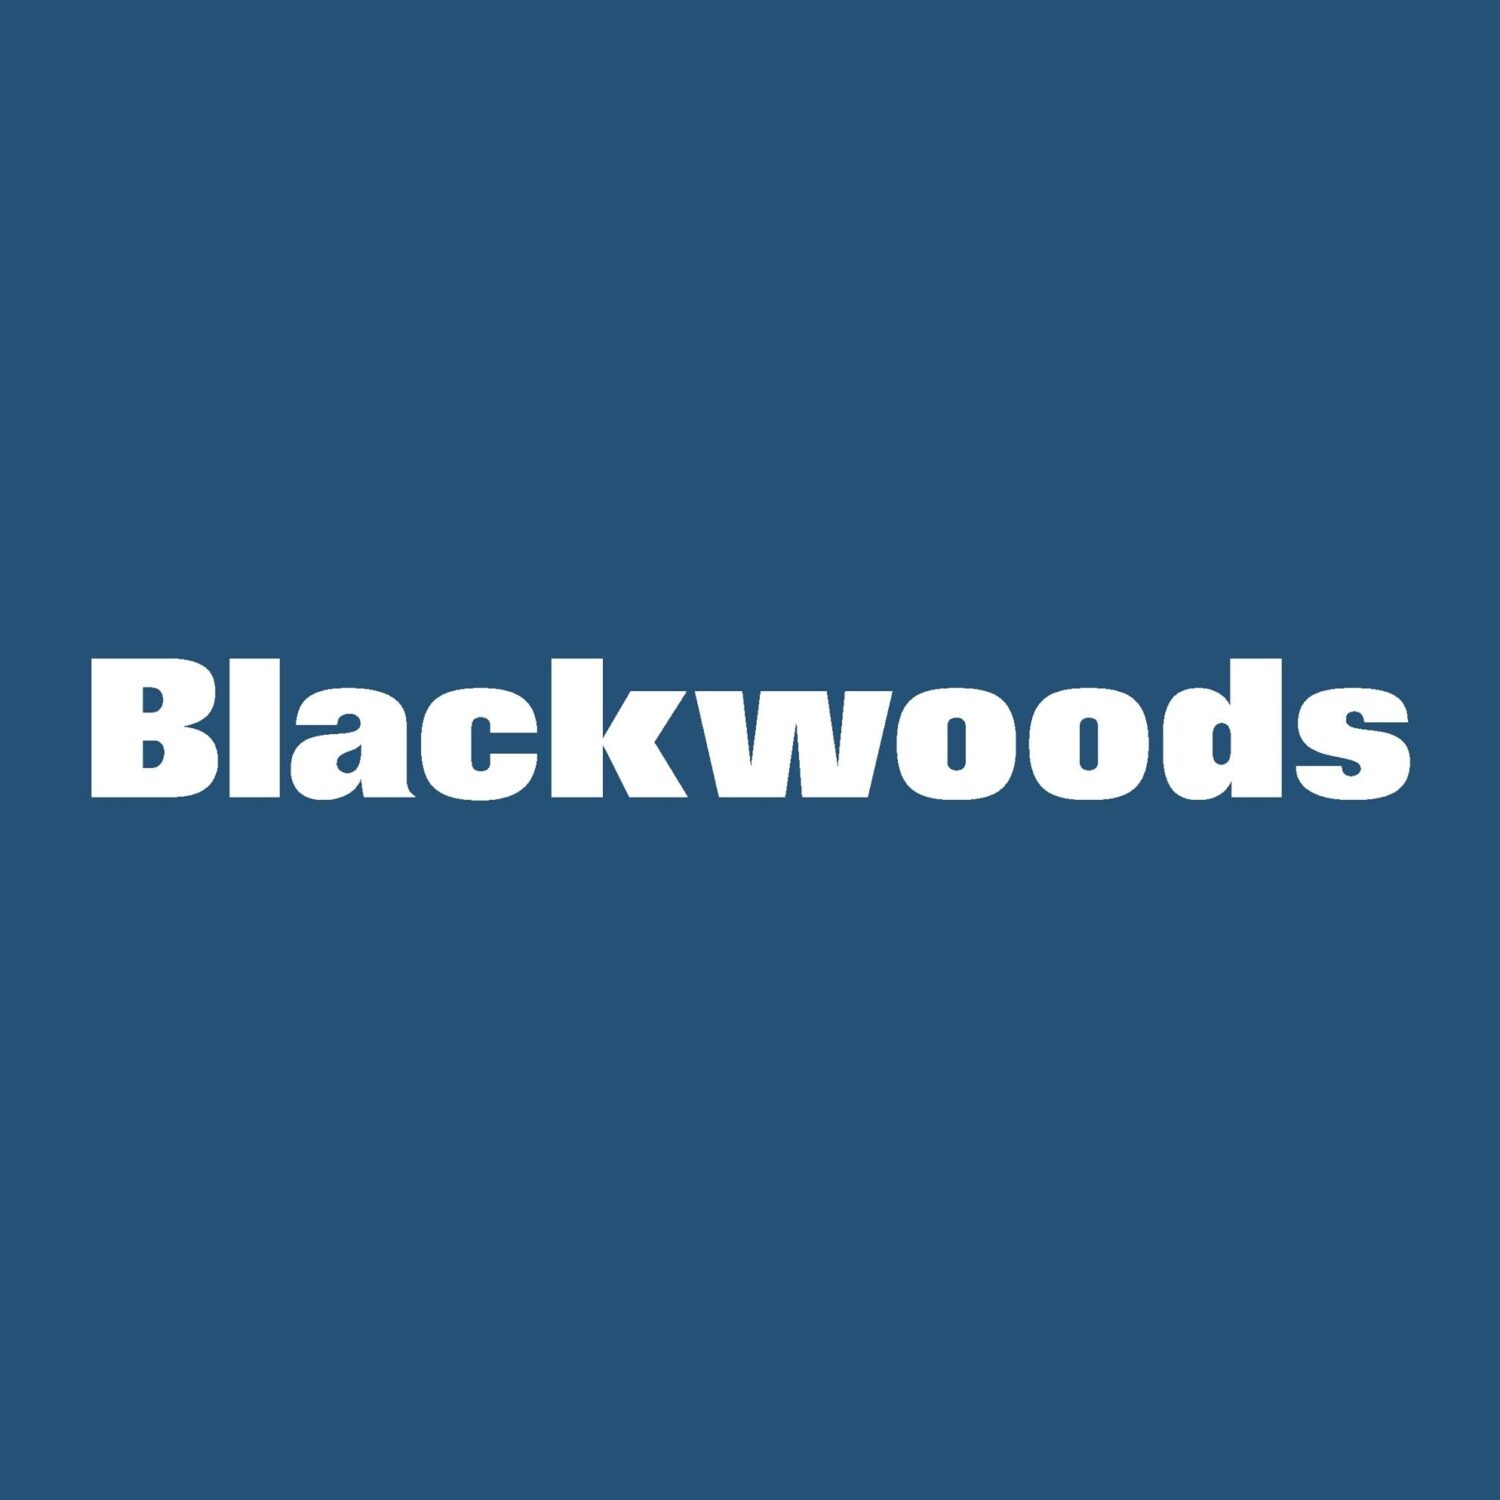 Blackwoods logo